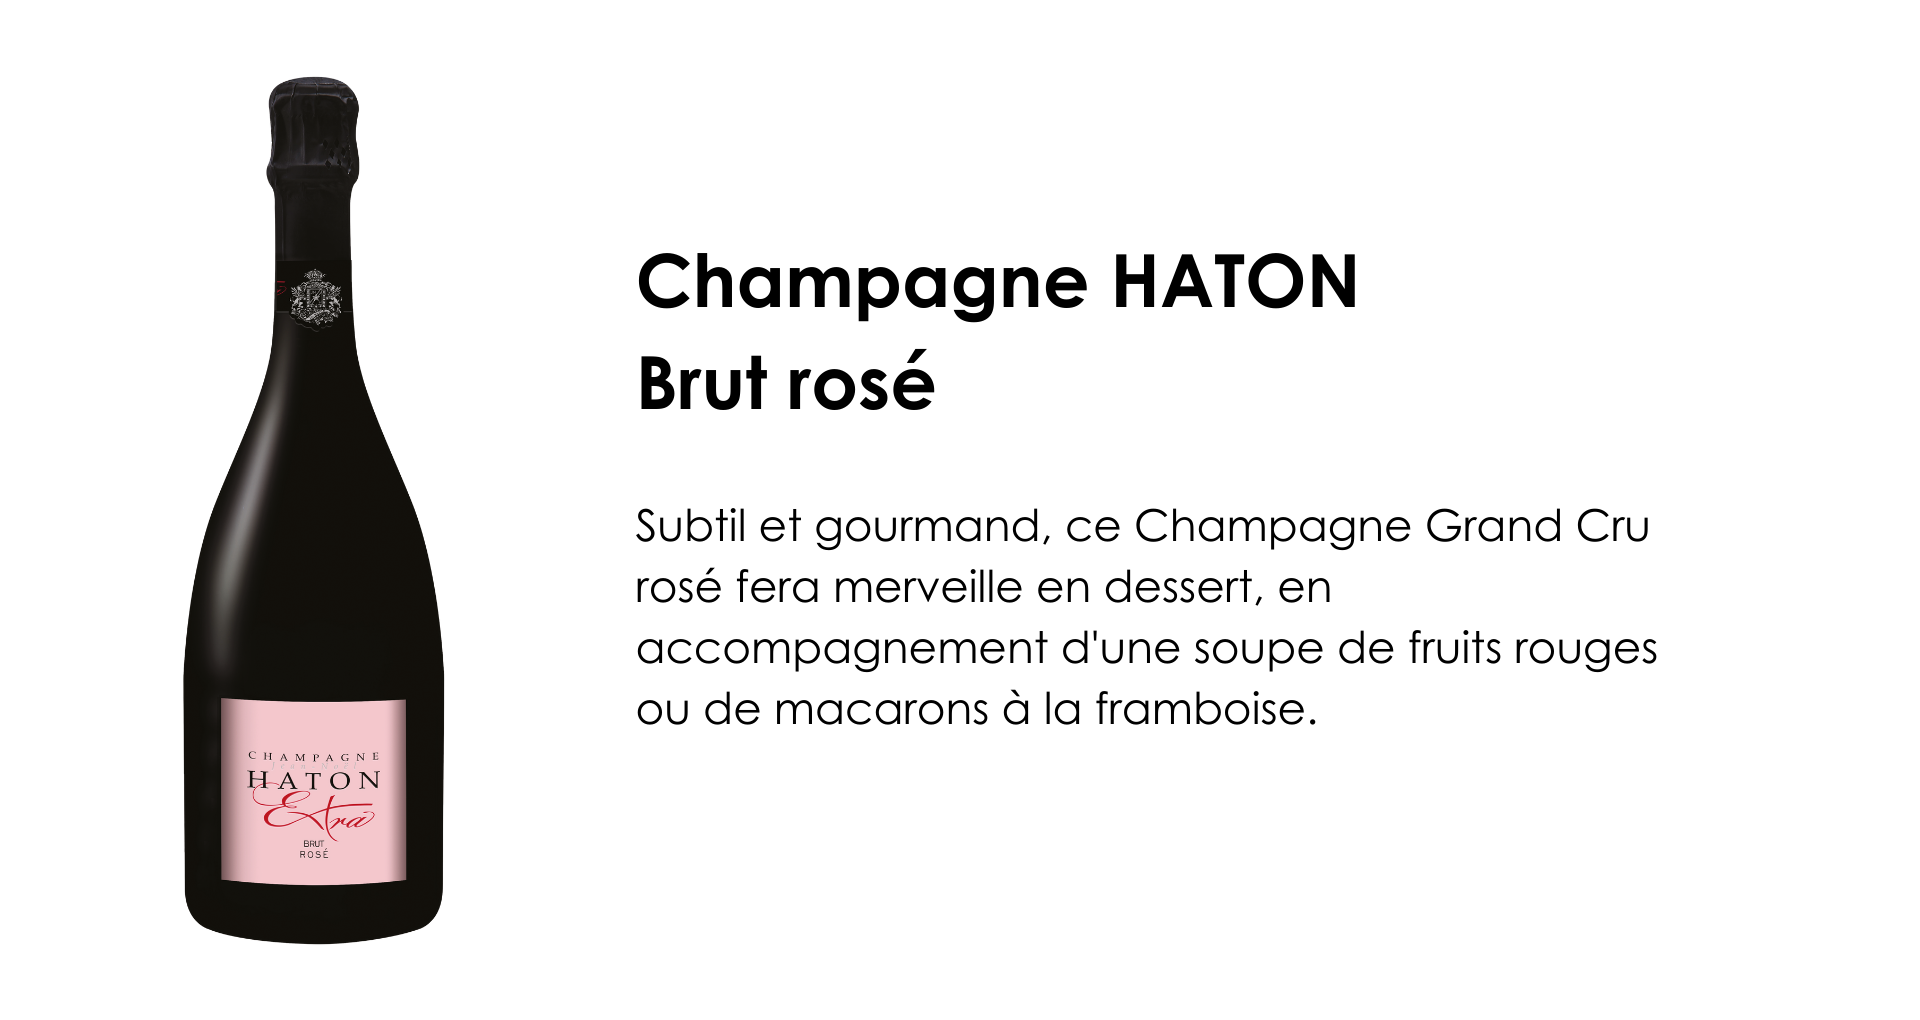 Champagne Haton brut rosé